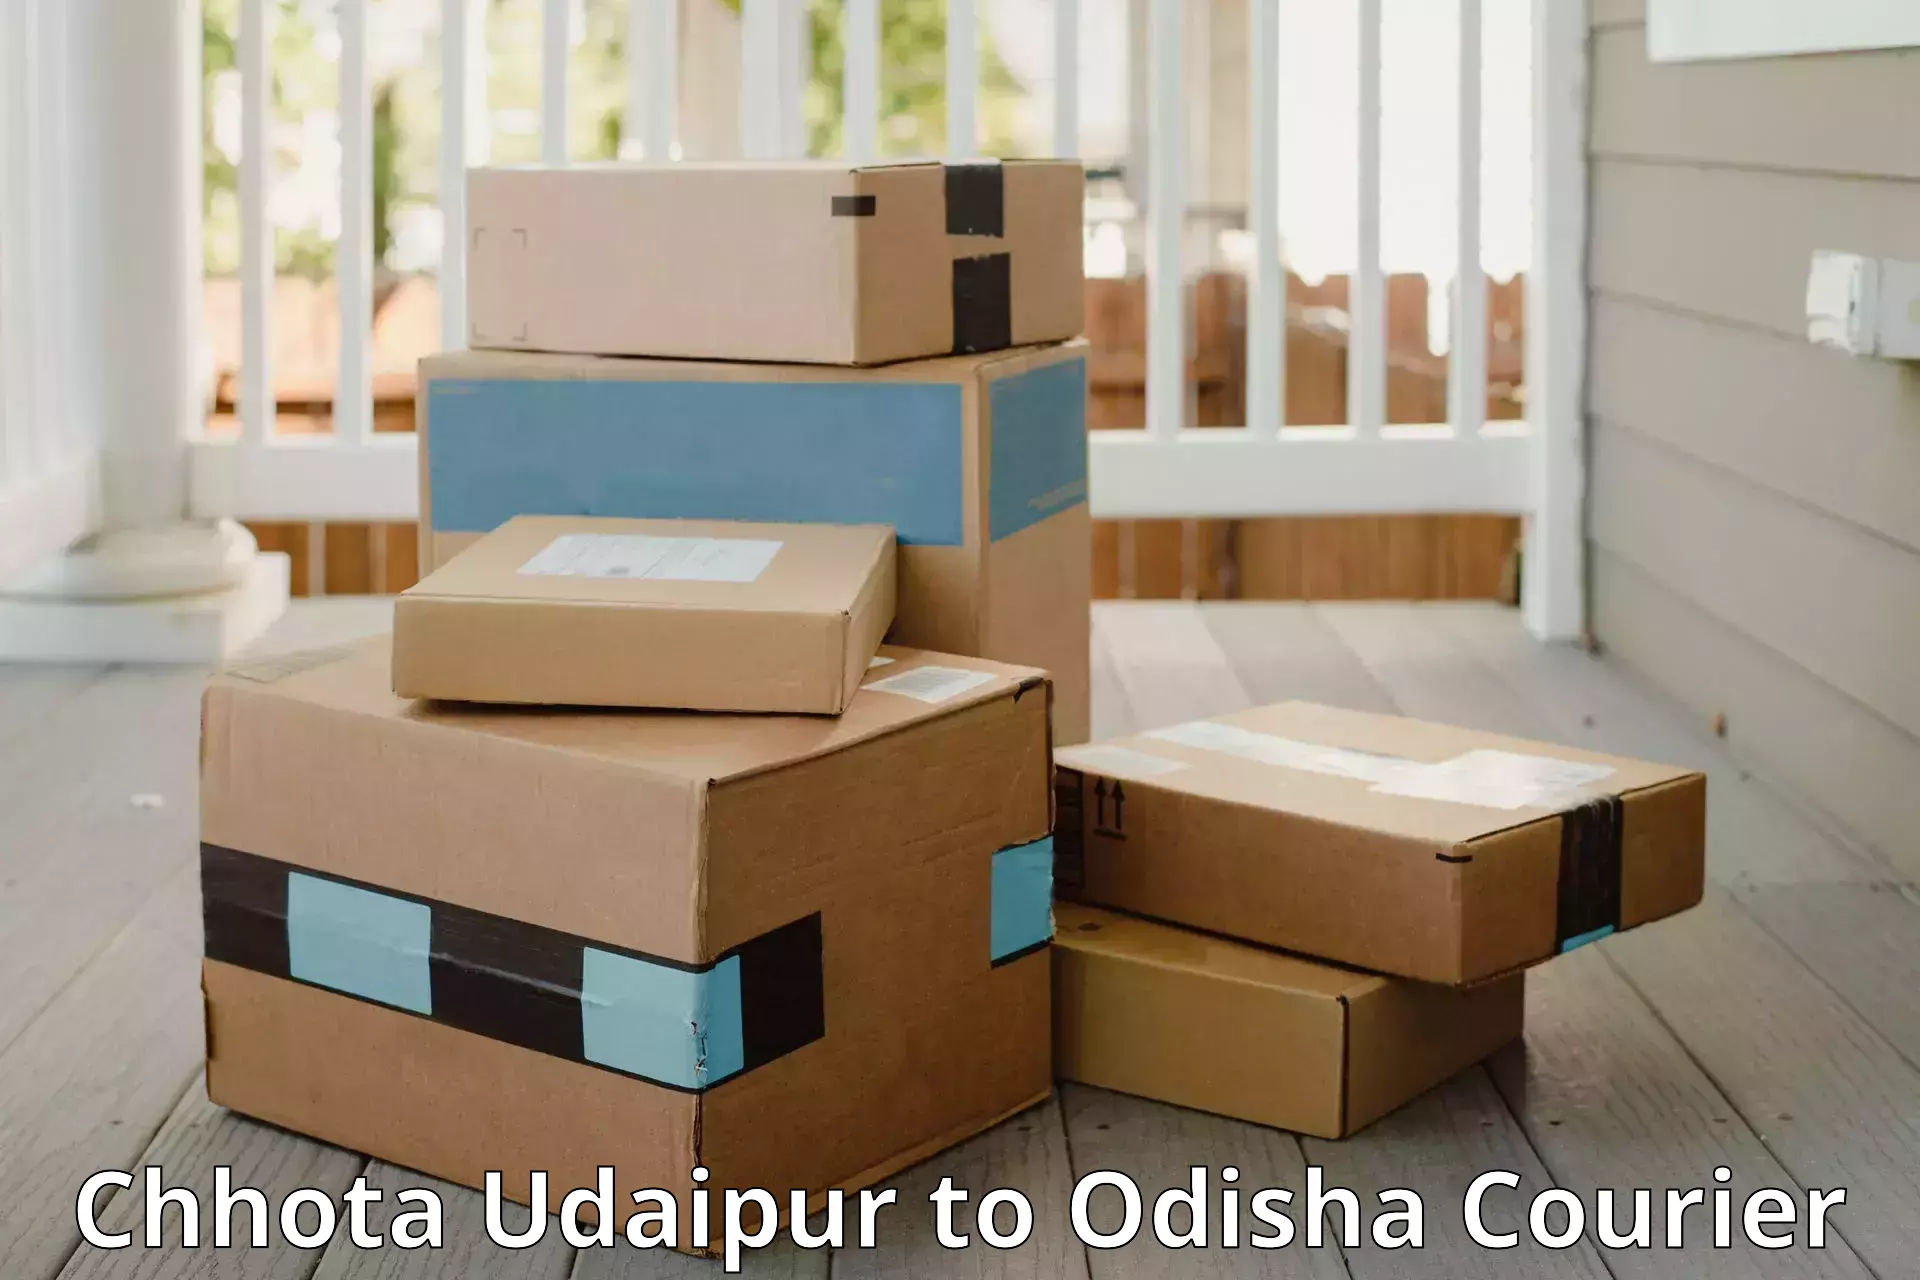 Express luggage delivery in Chhota Udaipur to Muniguda